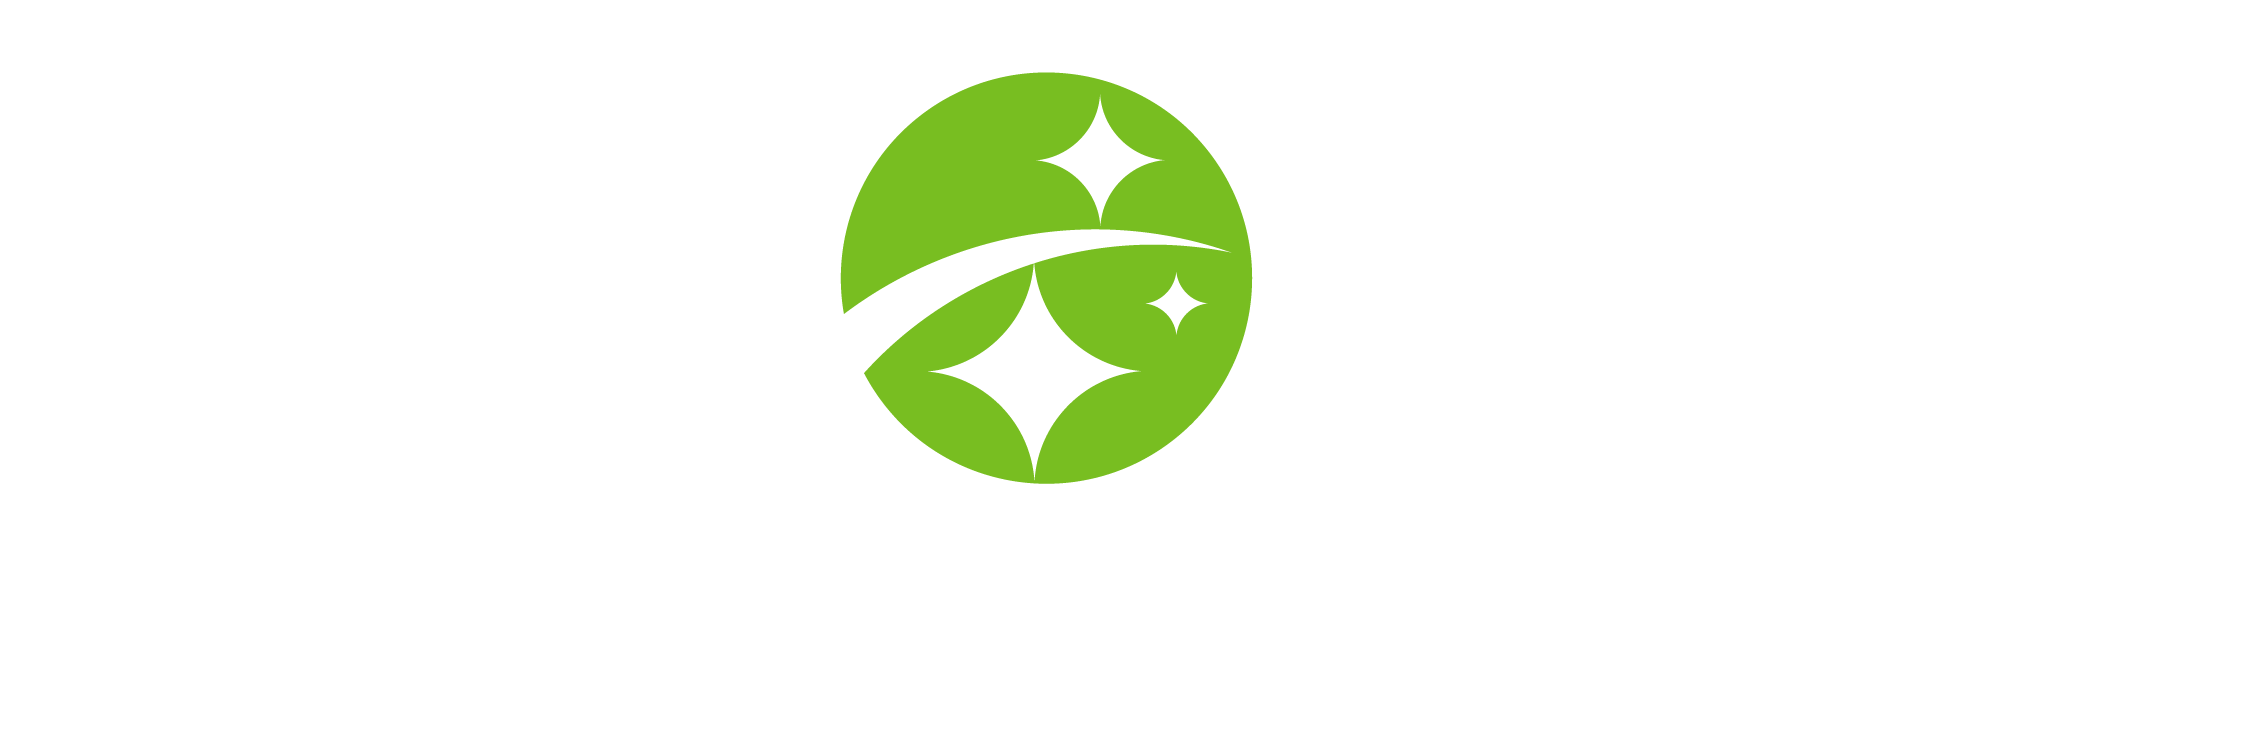 JAN-PTO -green part of logo